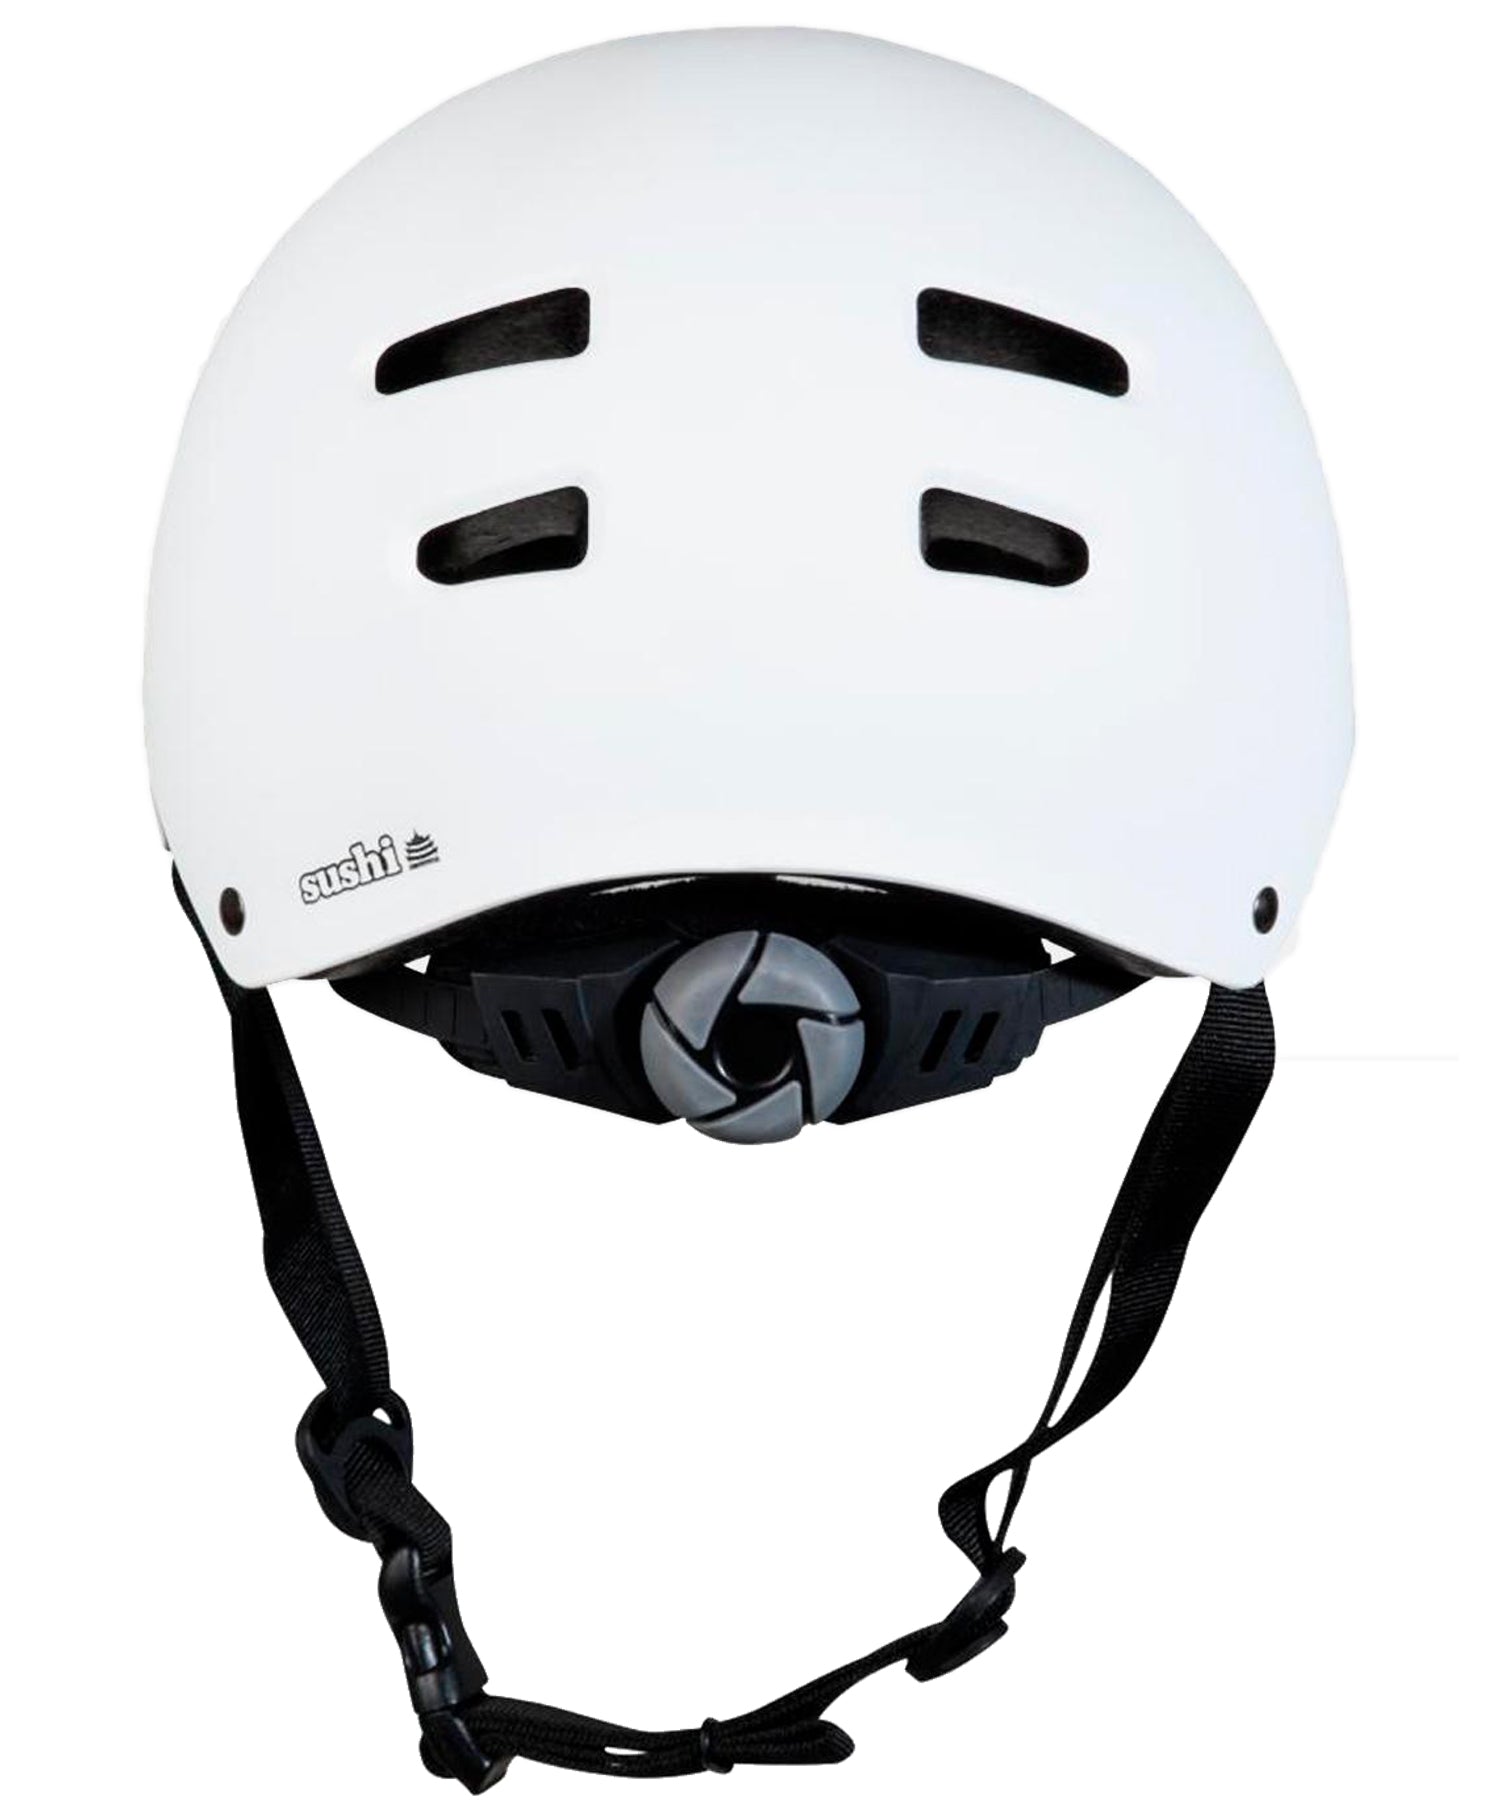 sushi-casco-protector-multi sport-de color blanco-regulable-Carcasa de ABS moldeada por inyección de alta densidad.